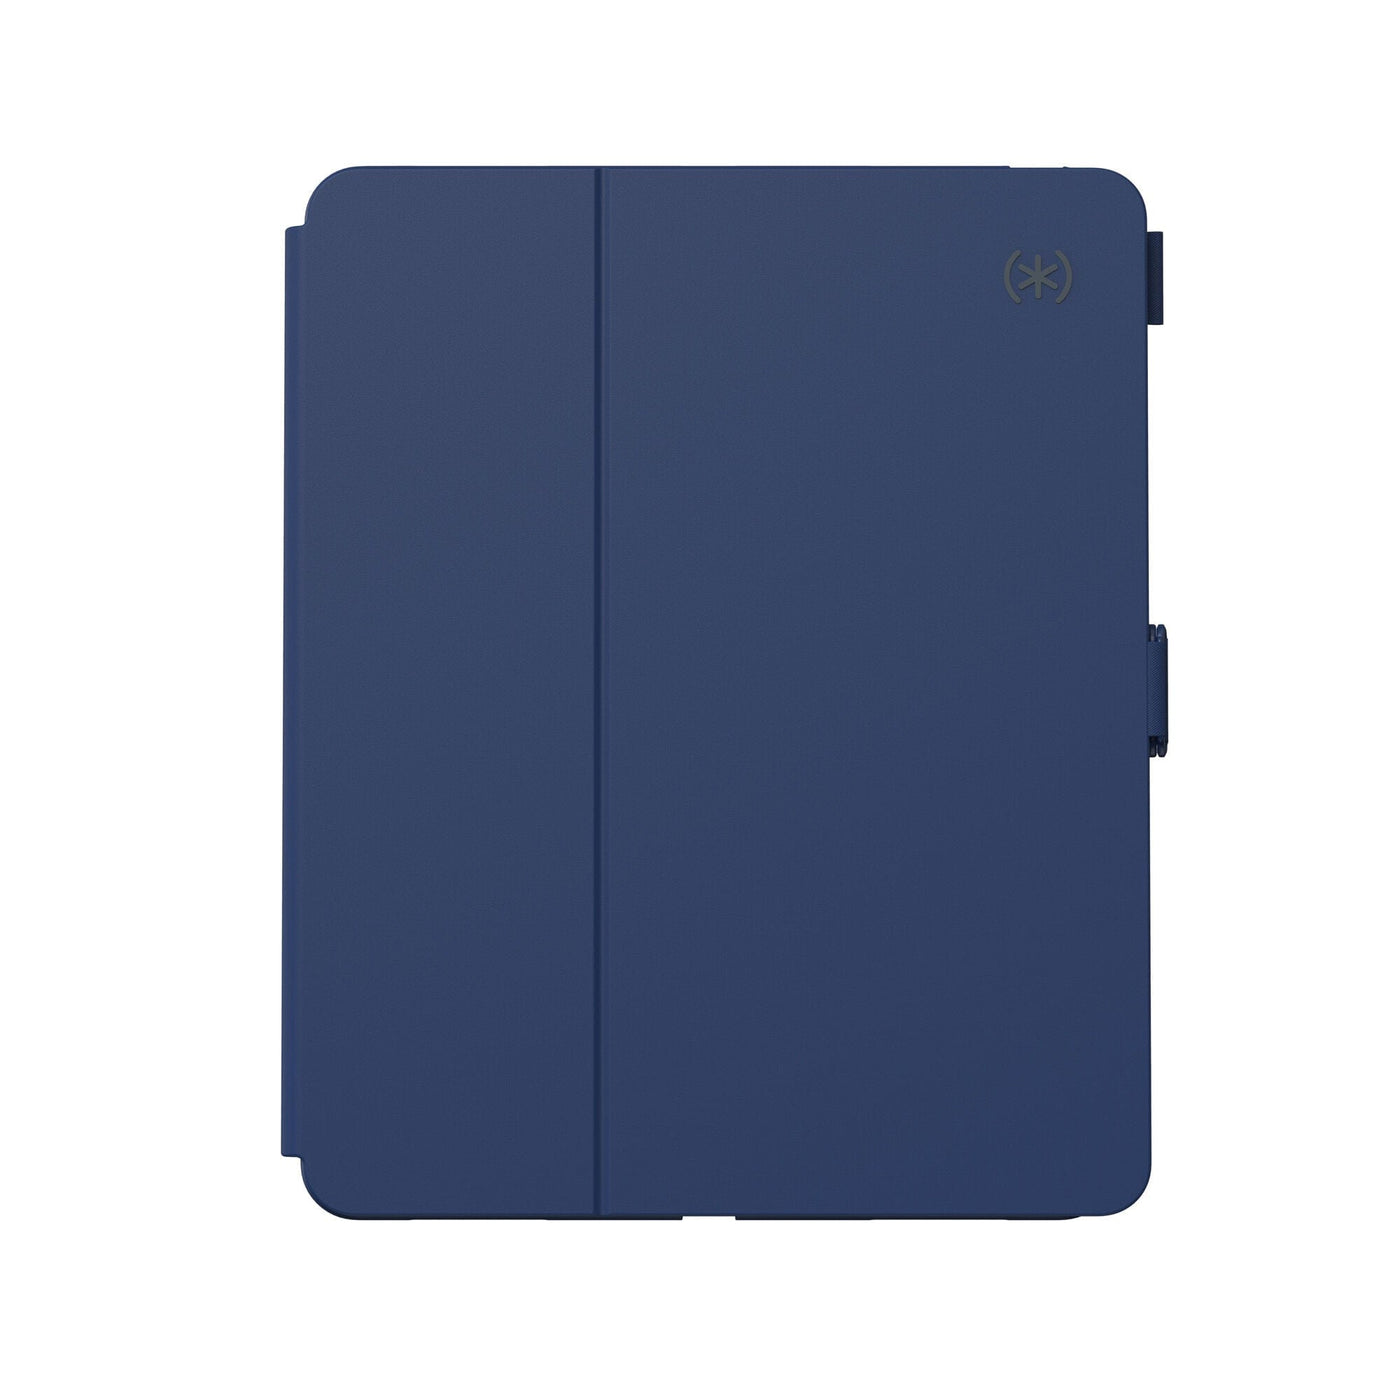 Speck Products Balance Folio Case iPad Air (2022)| iPad Air (2020)| 11-inch  iPad Pro| iPad Pro 11-in…See more Speck Products Balance Folio Case iPad